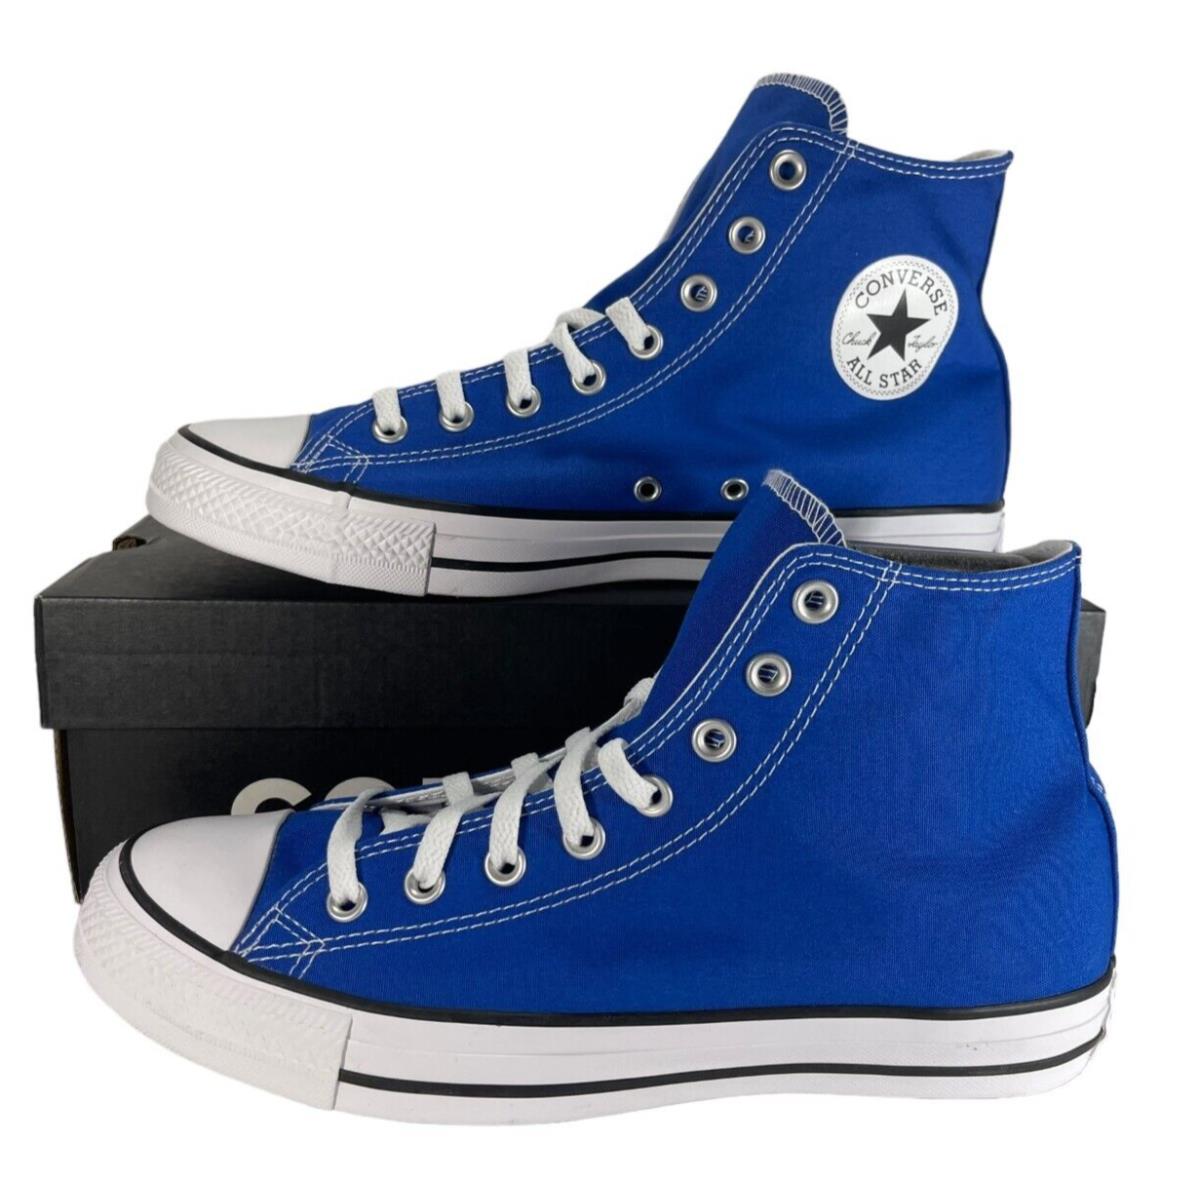 Converse Chuck Taylor Ctas Hi Sneakers Game Royal Blue A06161C Size 9 Men - Blue